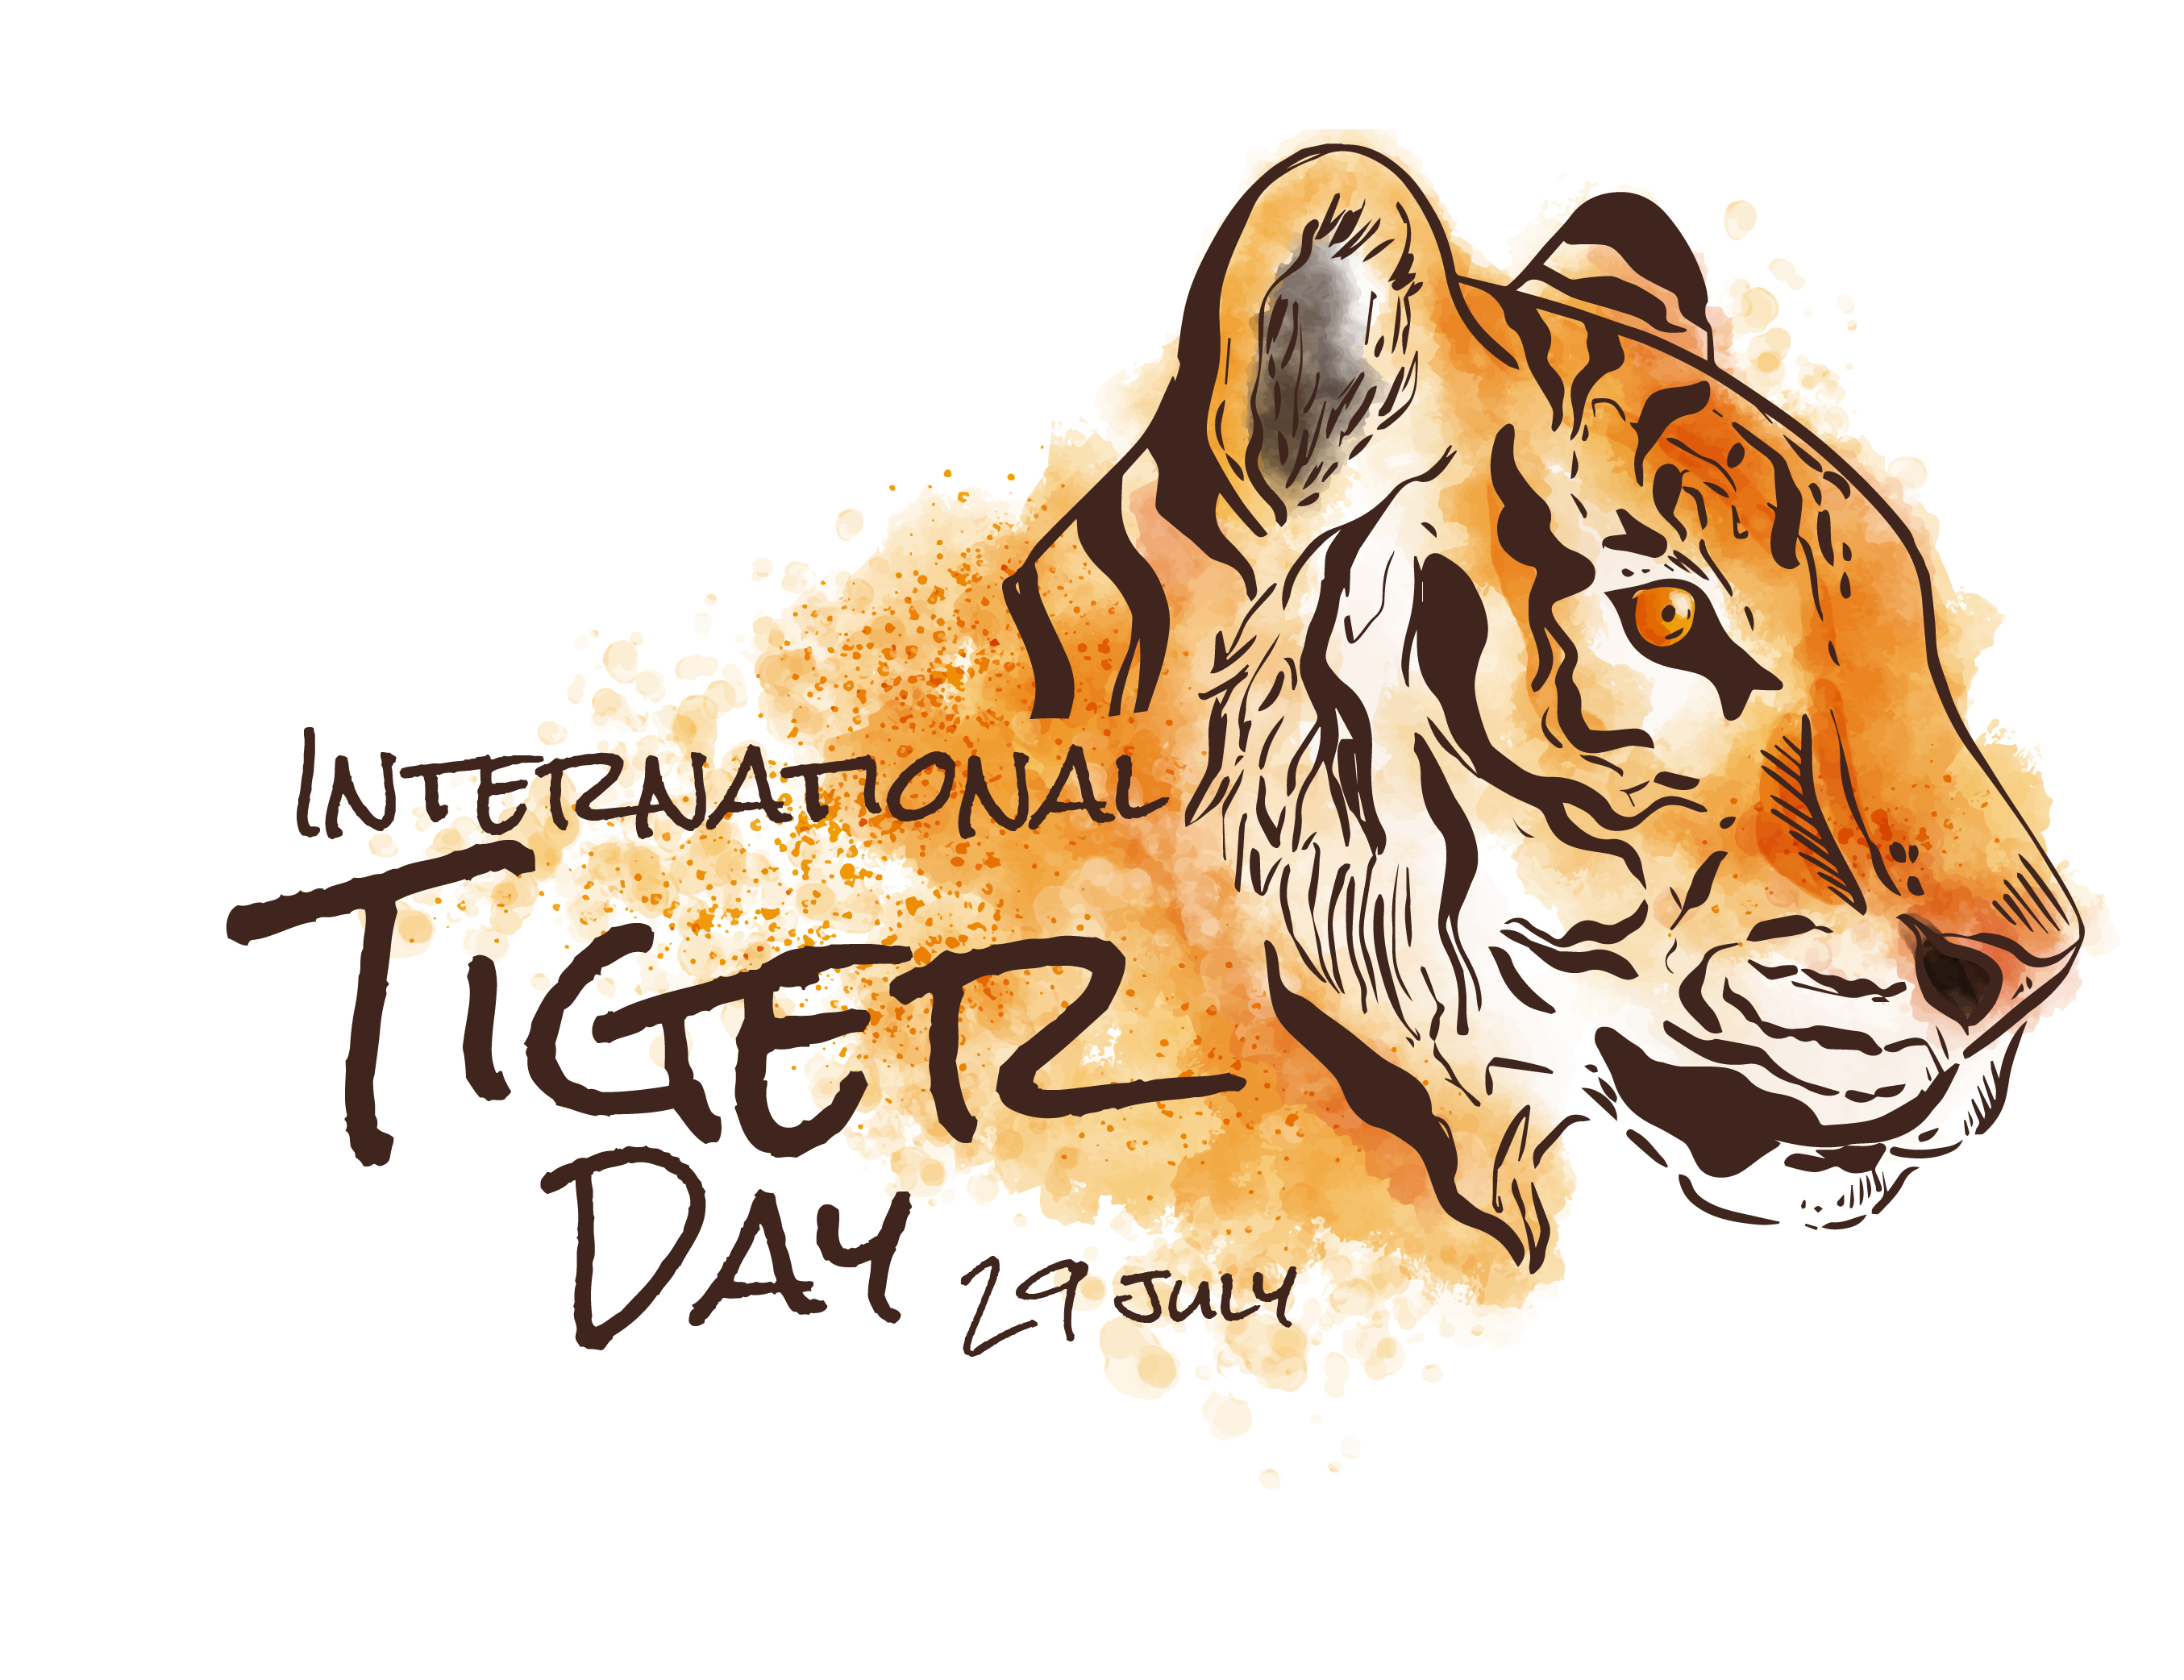 Internatıonal Tiger Day 29 July